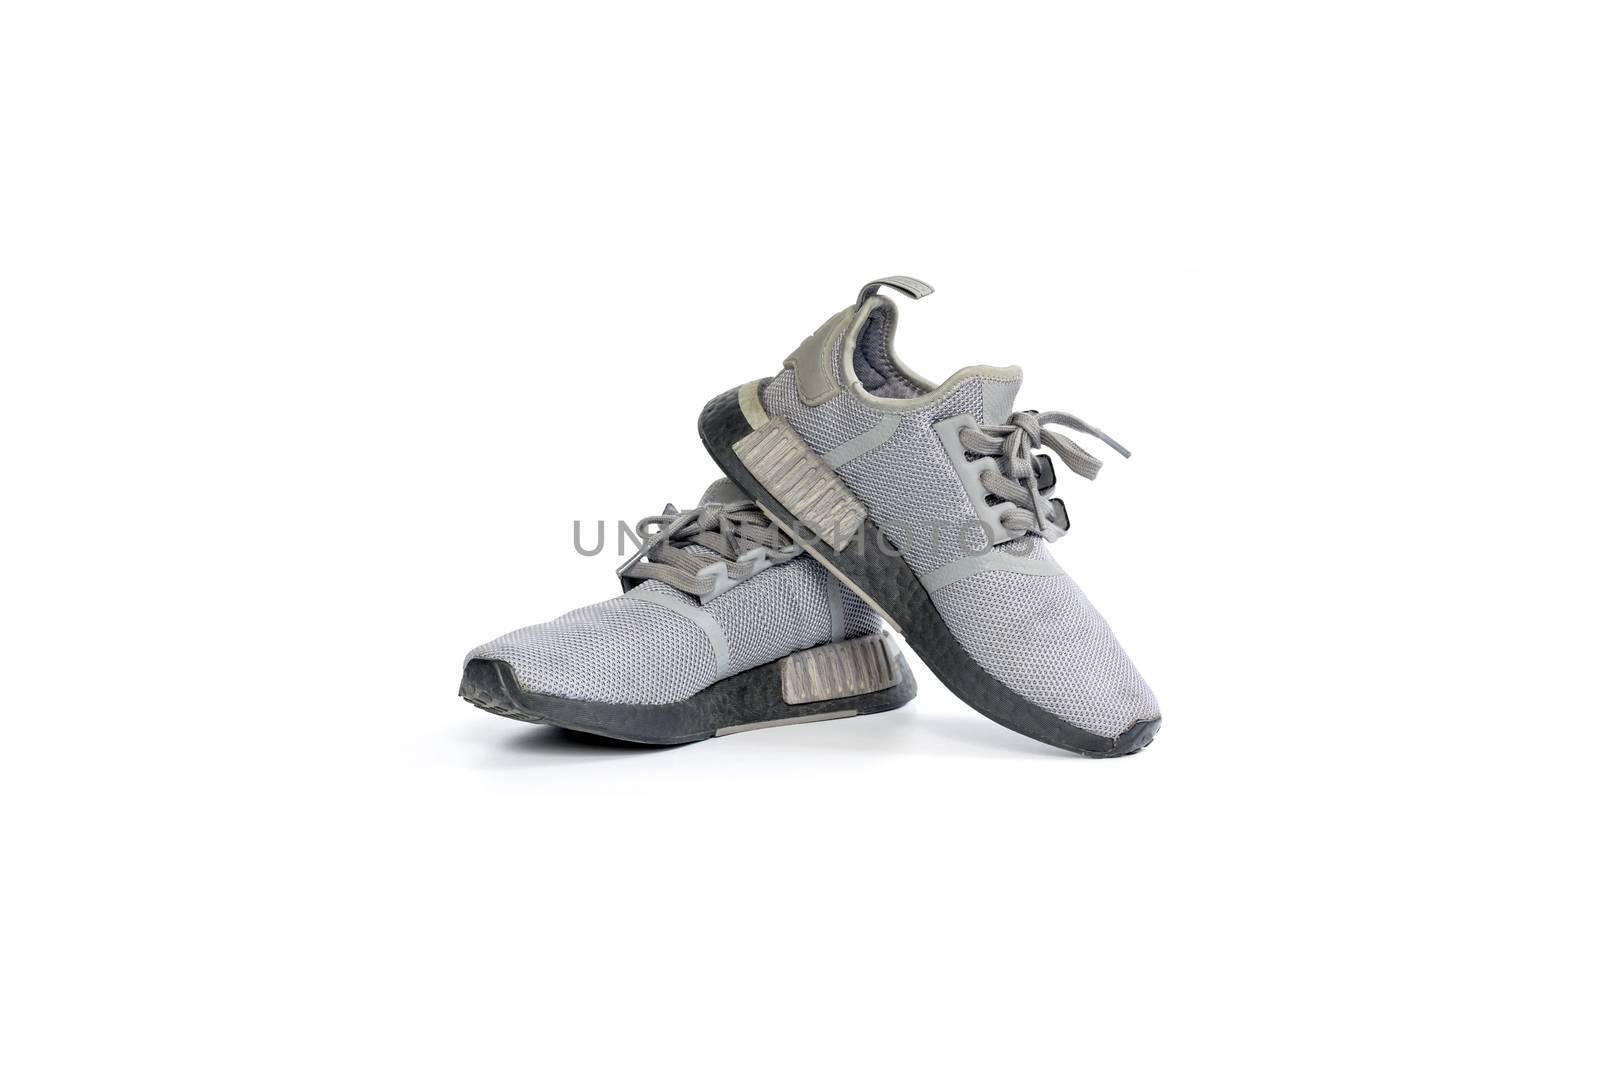 Pair of gray running shoes. by wattanaphob